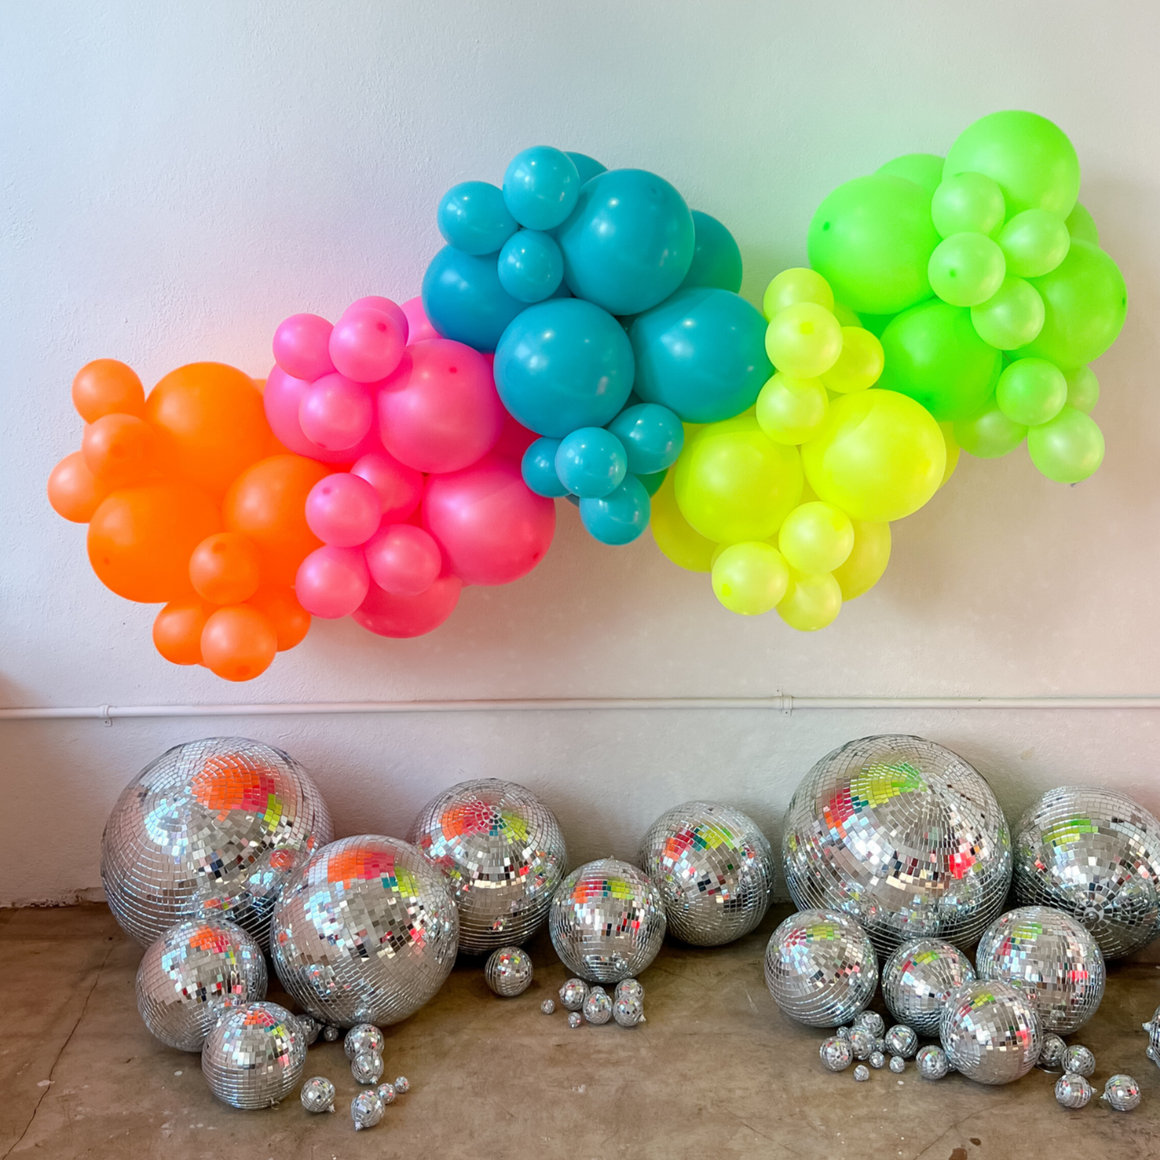 Neon DIY Balloon Garland Kit